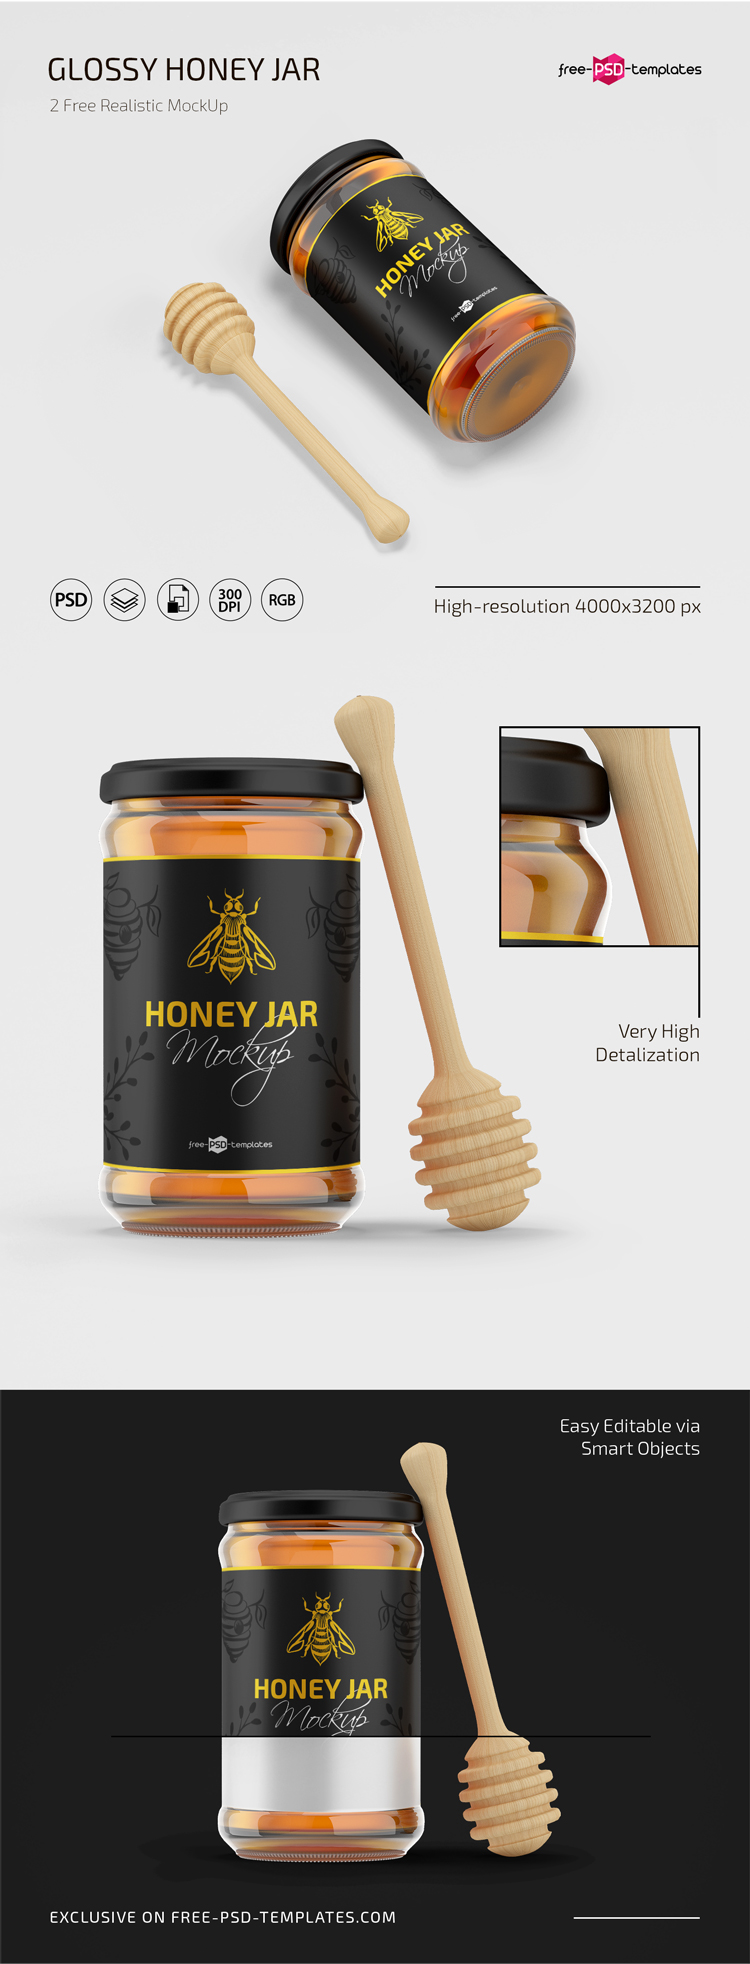 Download Free PSD Honey Jar Mockup Set | Free PSD Templates